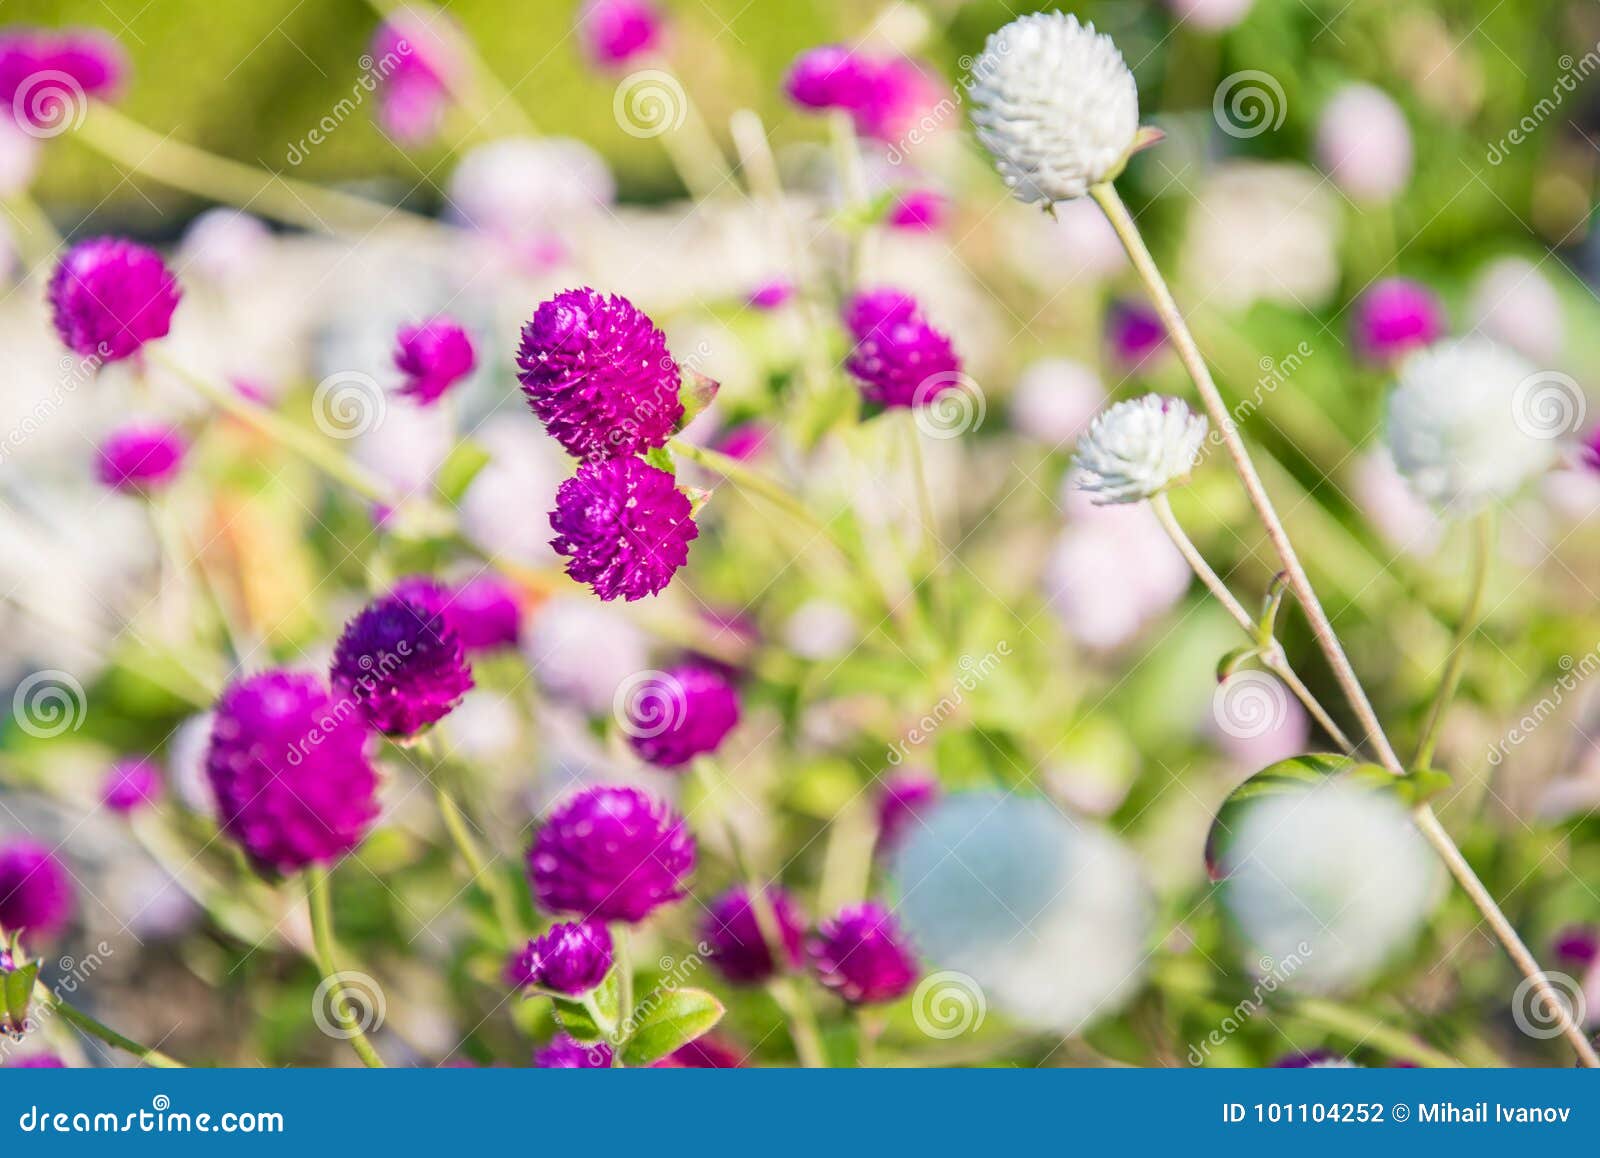 Purple And White Globe Amaranth Or Gomphrena Globosa Stock Photo Image Of Flower Height 101104252